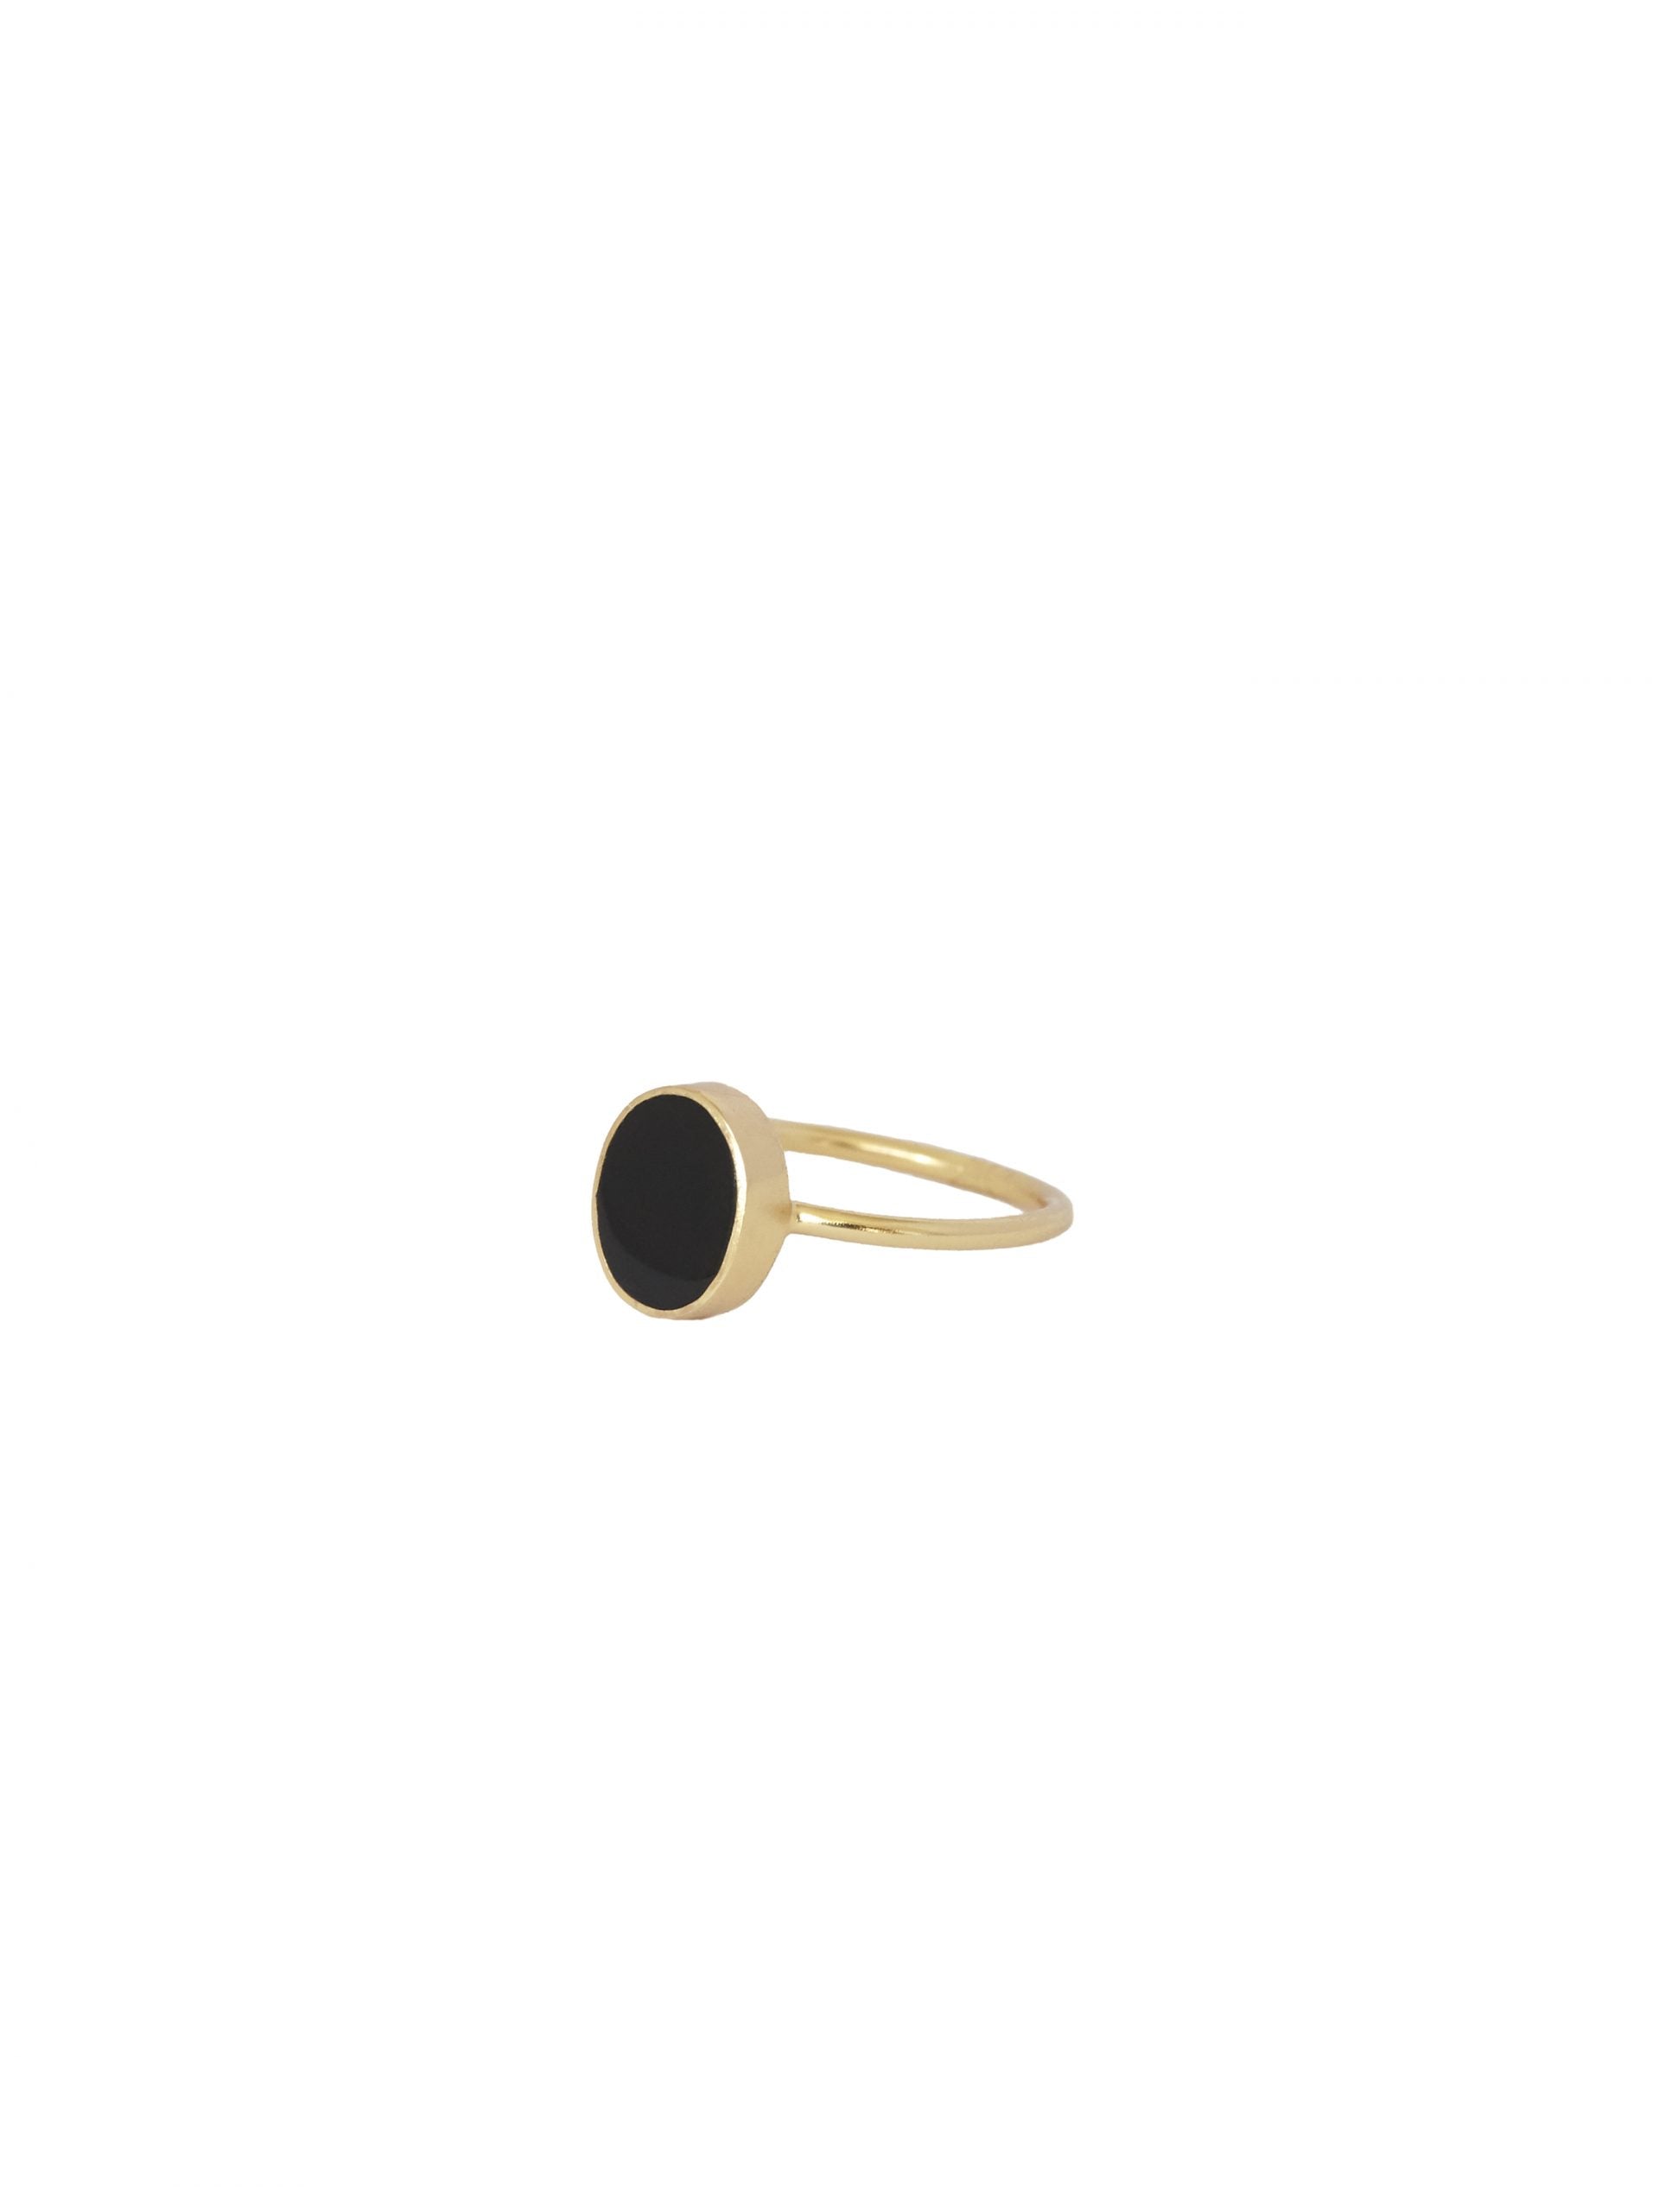 Petite Oval Noir Ring Gold